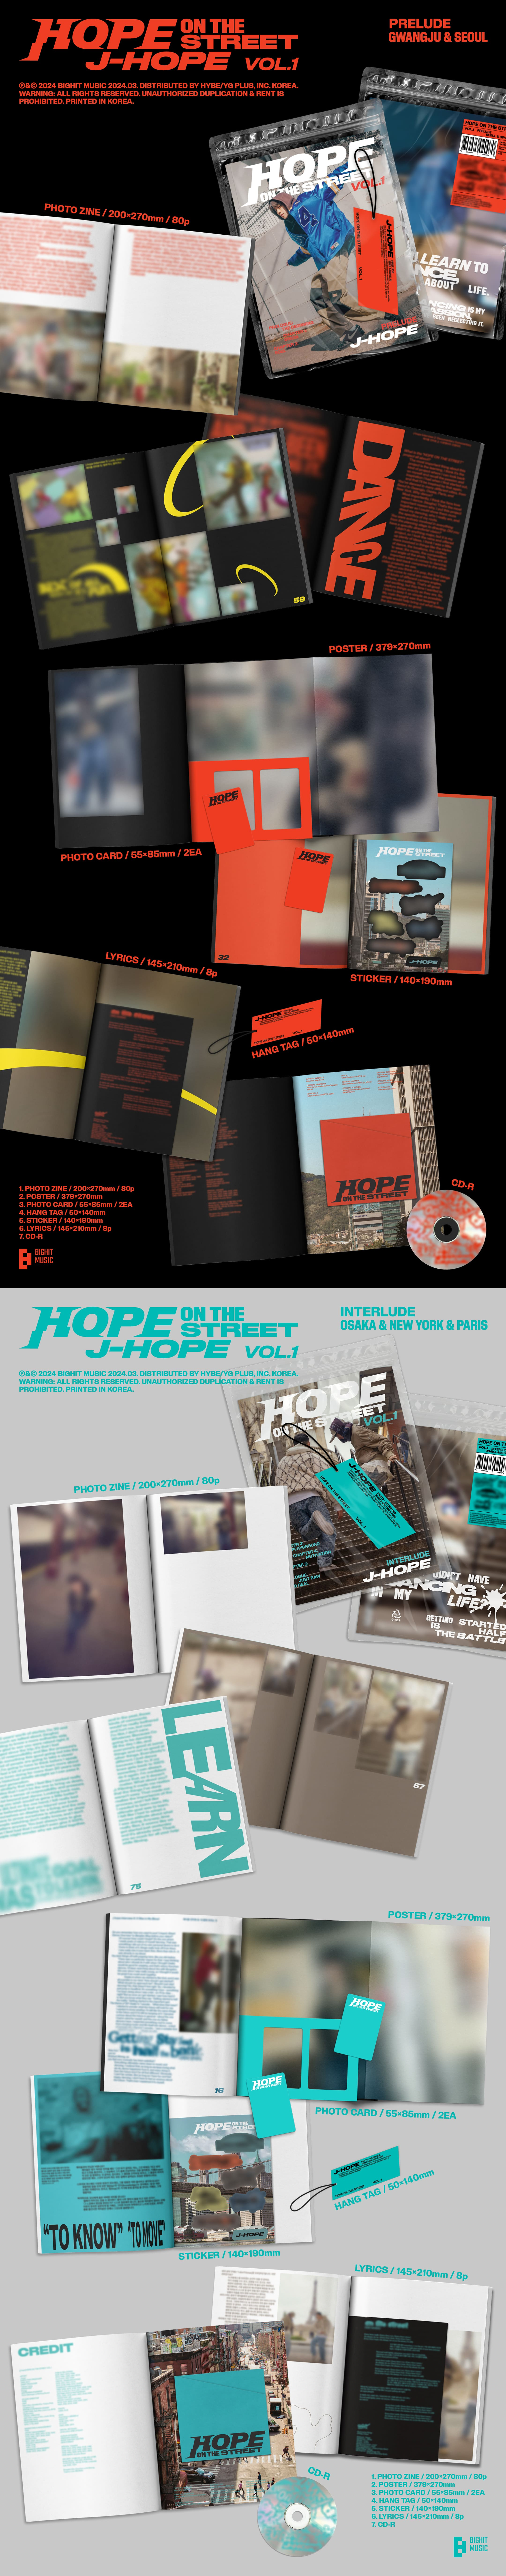 J-HOPE (BTS) HOPE ON THE STREET VOL.1